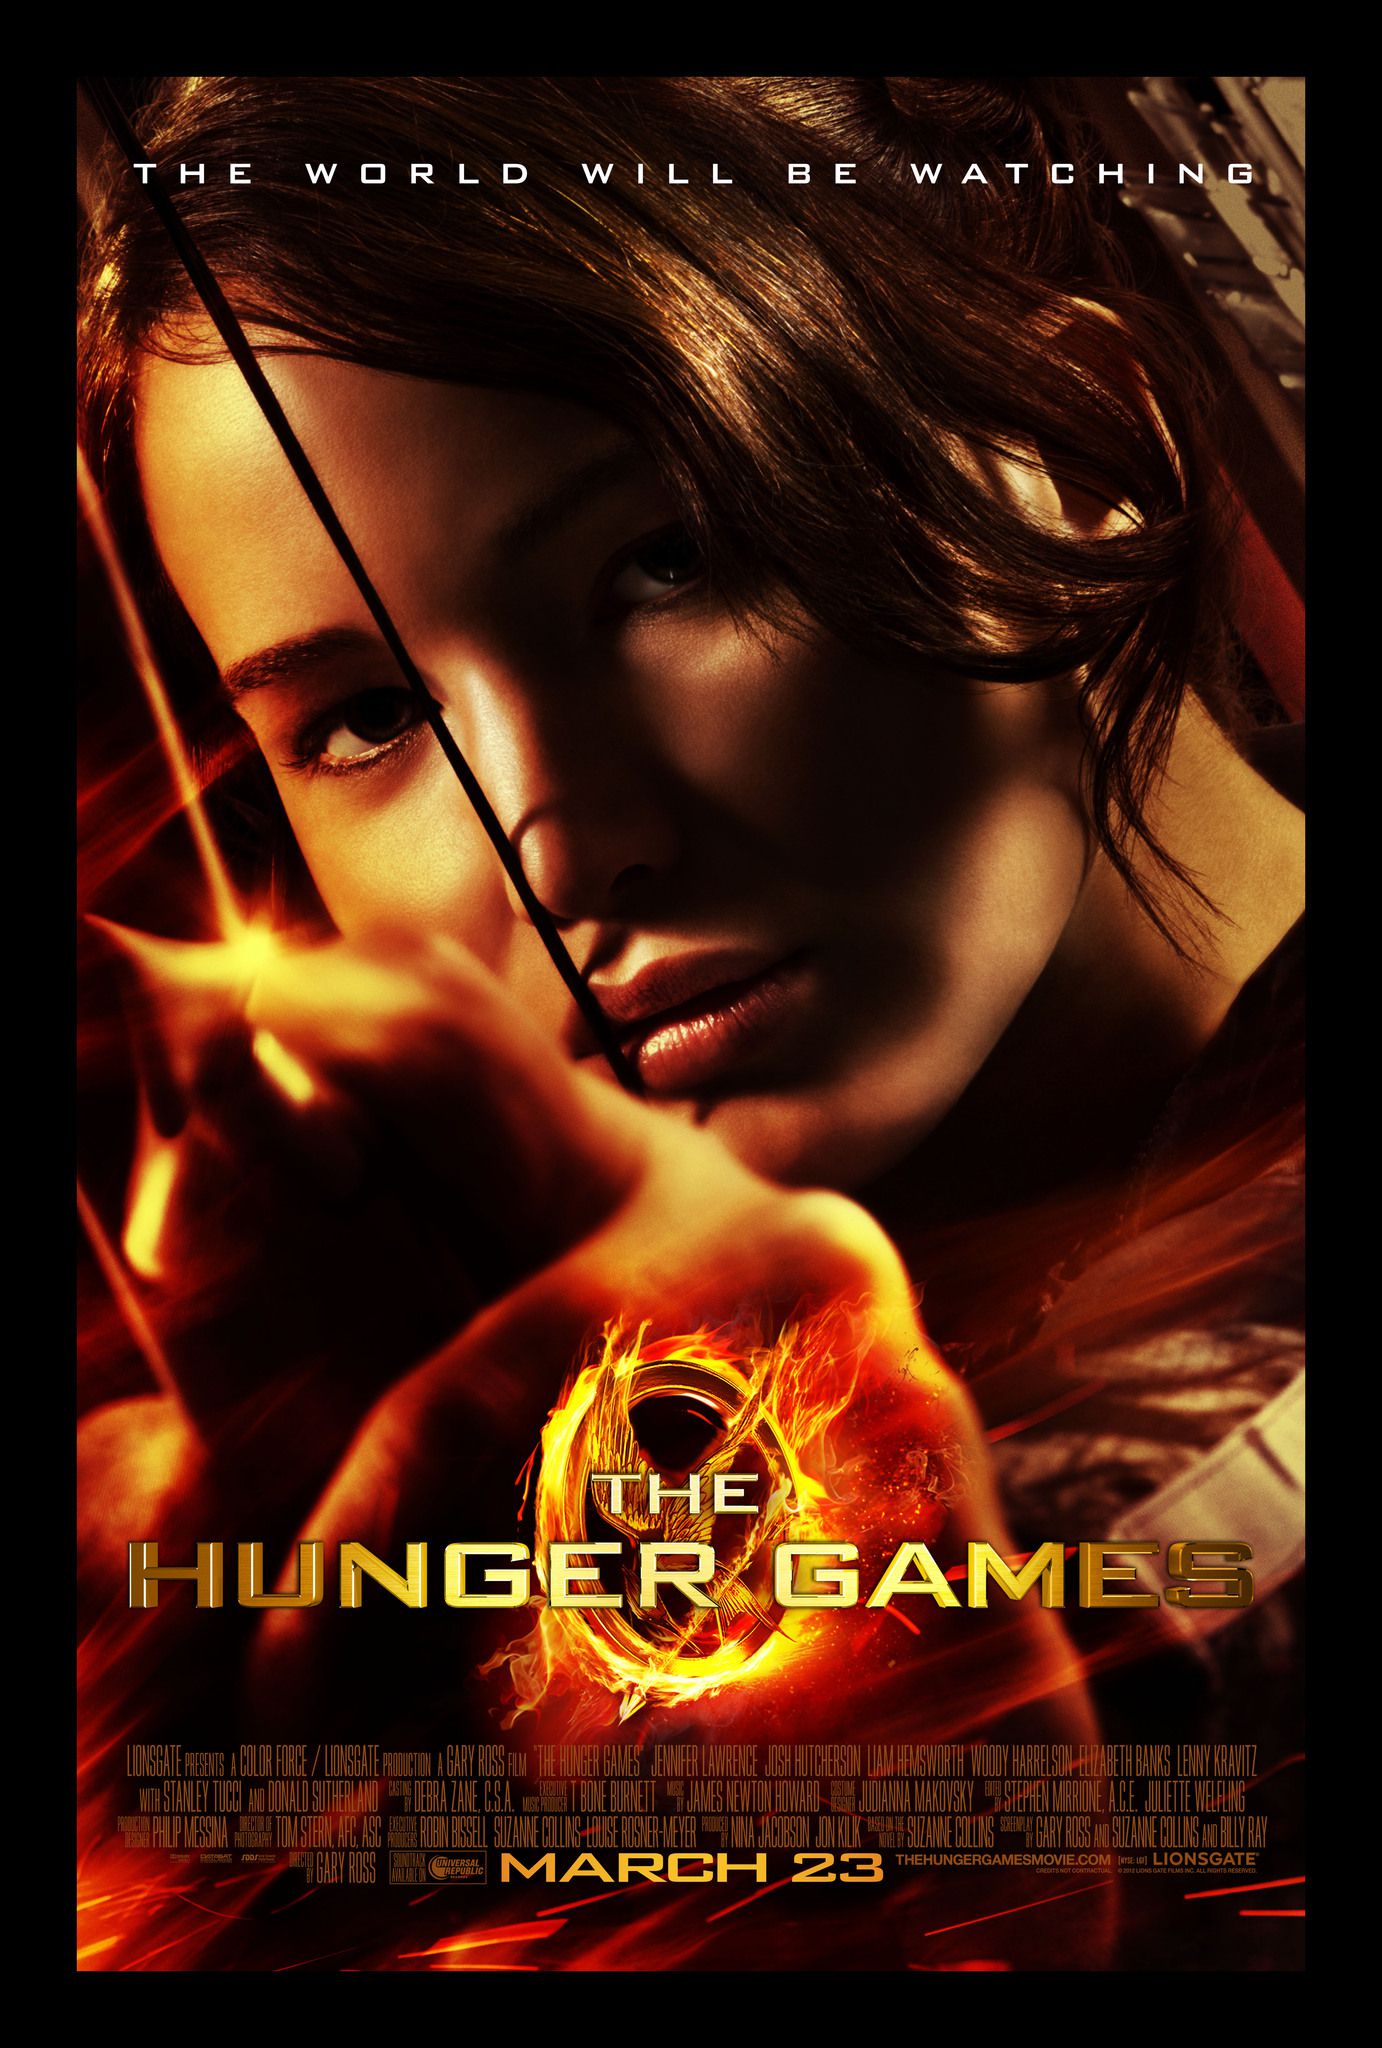 Urutan Nonton Film The Hunger Games